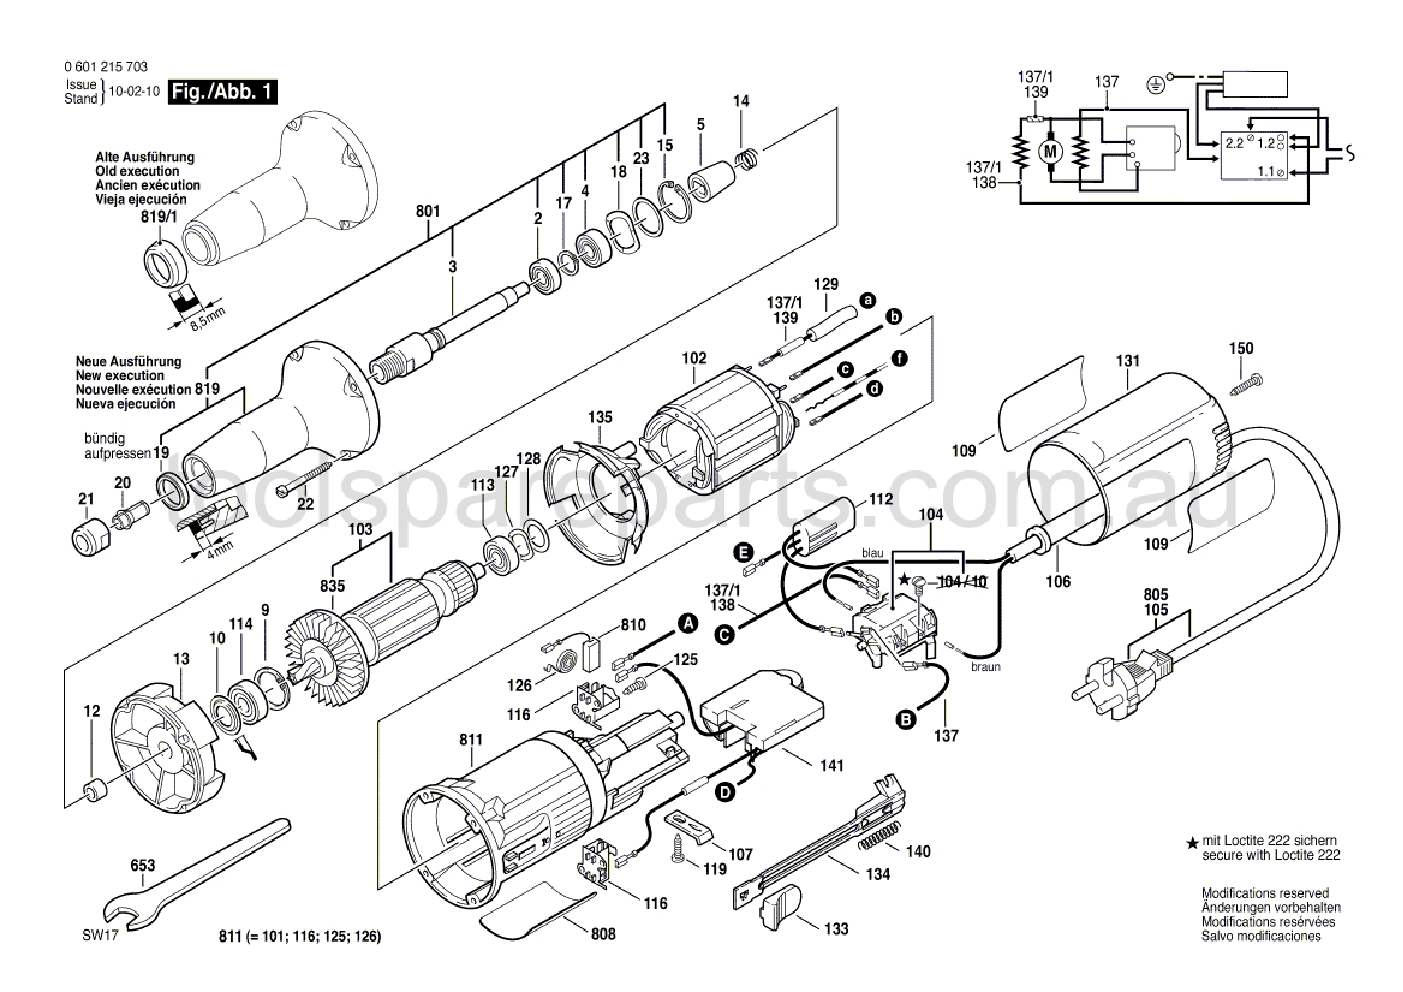 Bosch GGS 27 LC 0601215737  Diagram 1